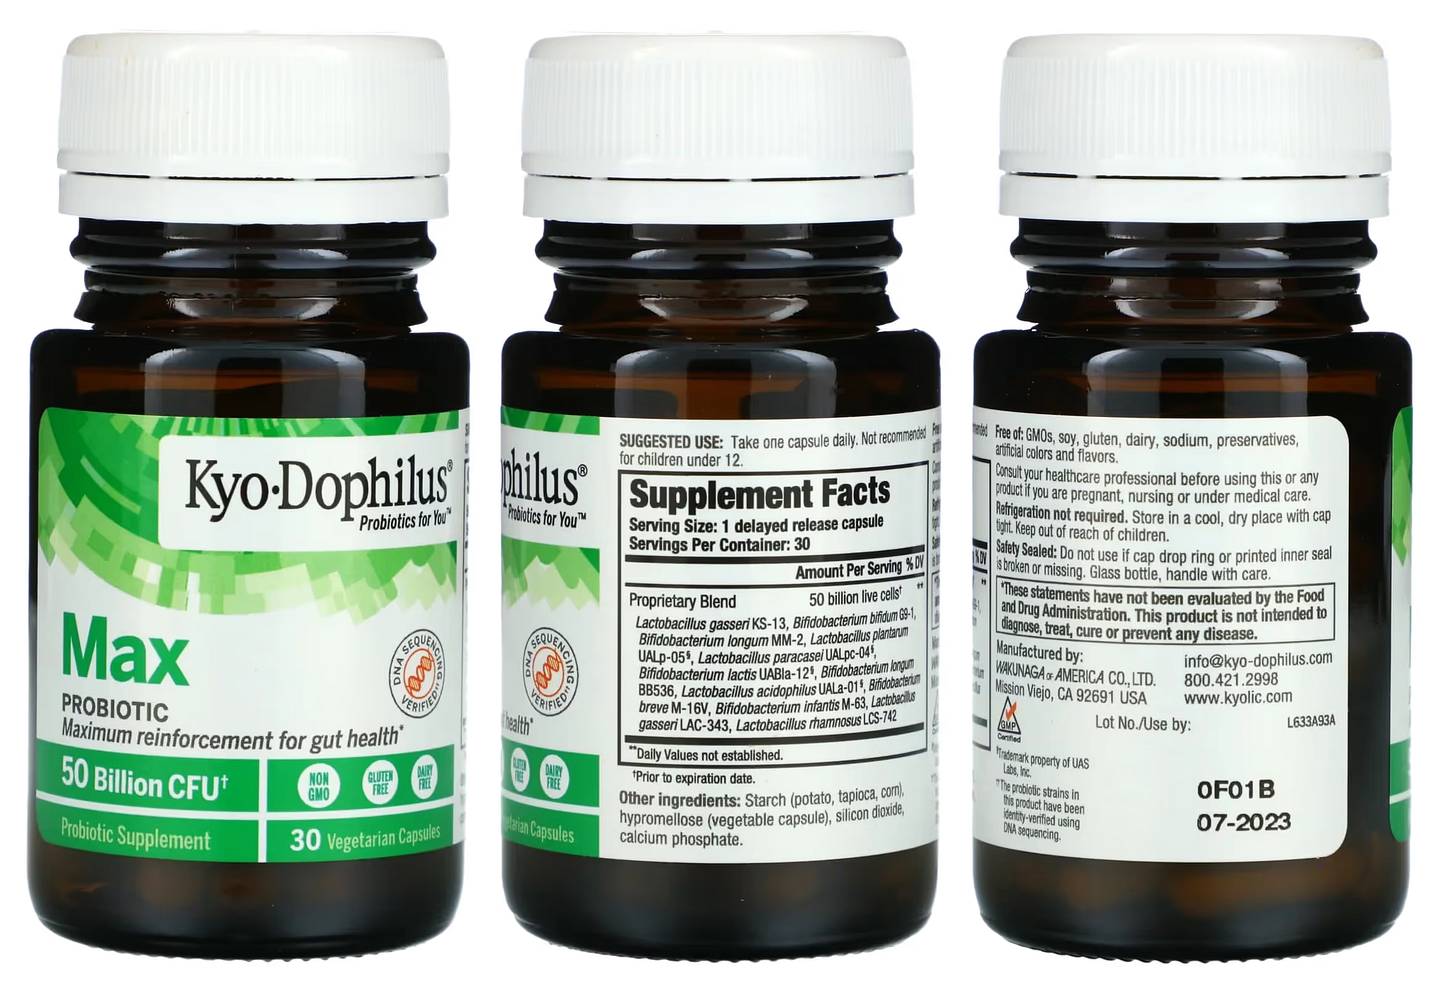 Kyolic, Kyo-Dophilus, Max Probiotic, 50 Billion CFU packaging